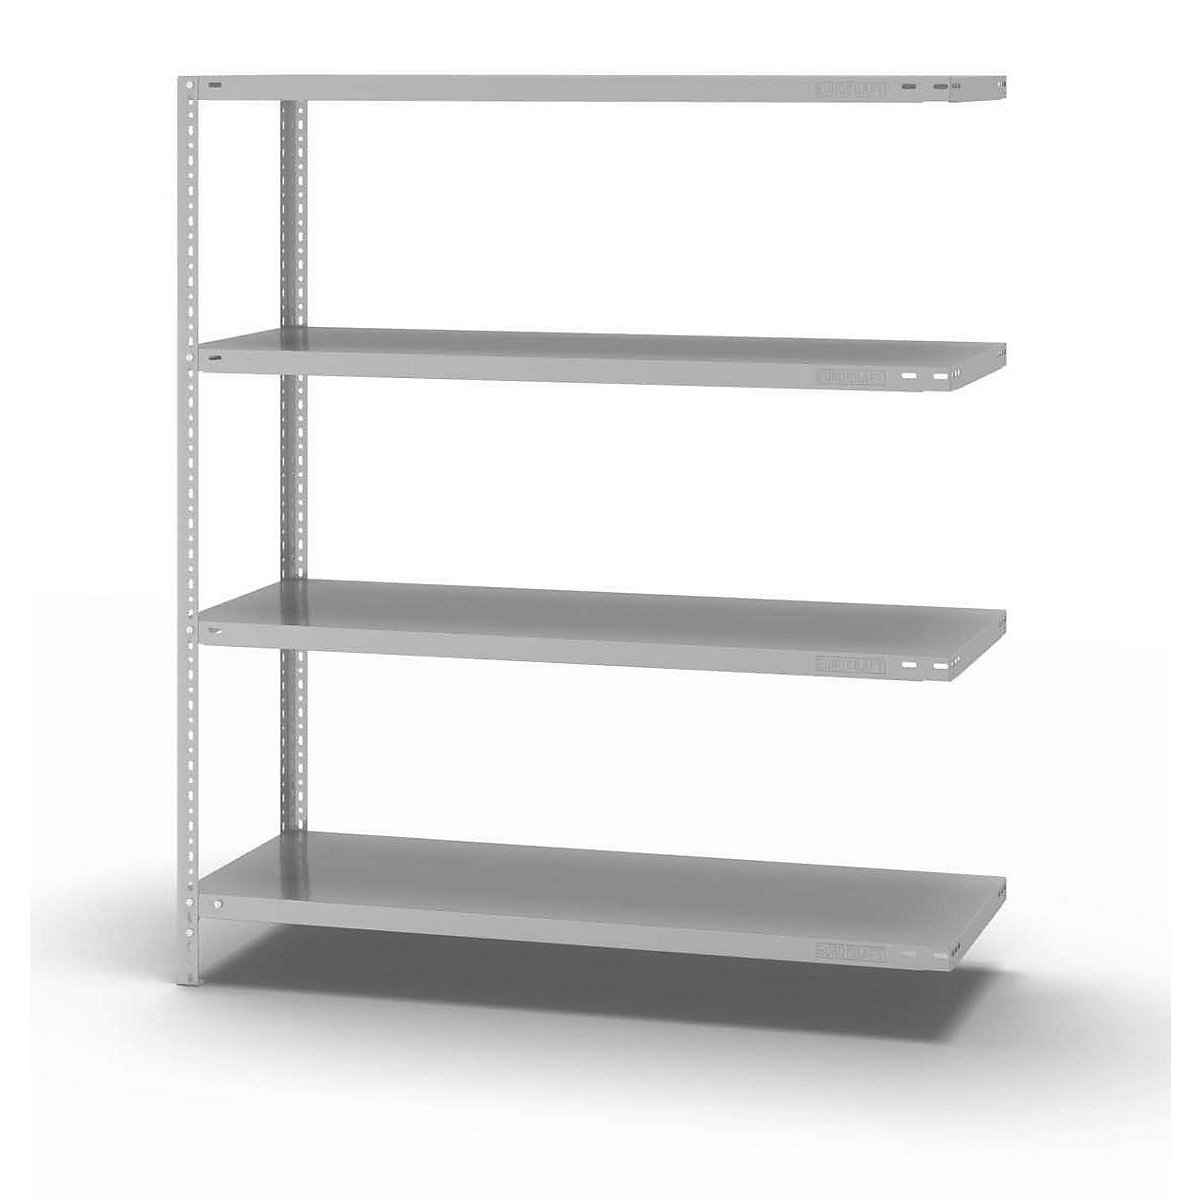 Bolt-together shelf unit, light duty, plastic coated – eurokraft pro, shelf unit height 1500 mm, shelf width 1300 mm, depth 500 mm, extension shelf unit-7